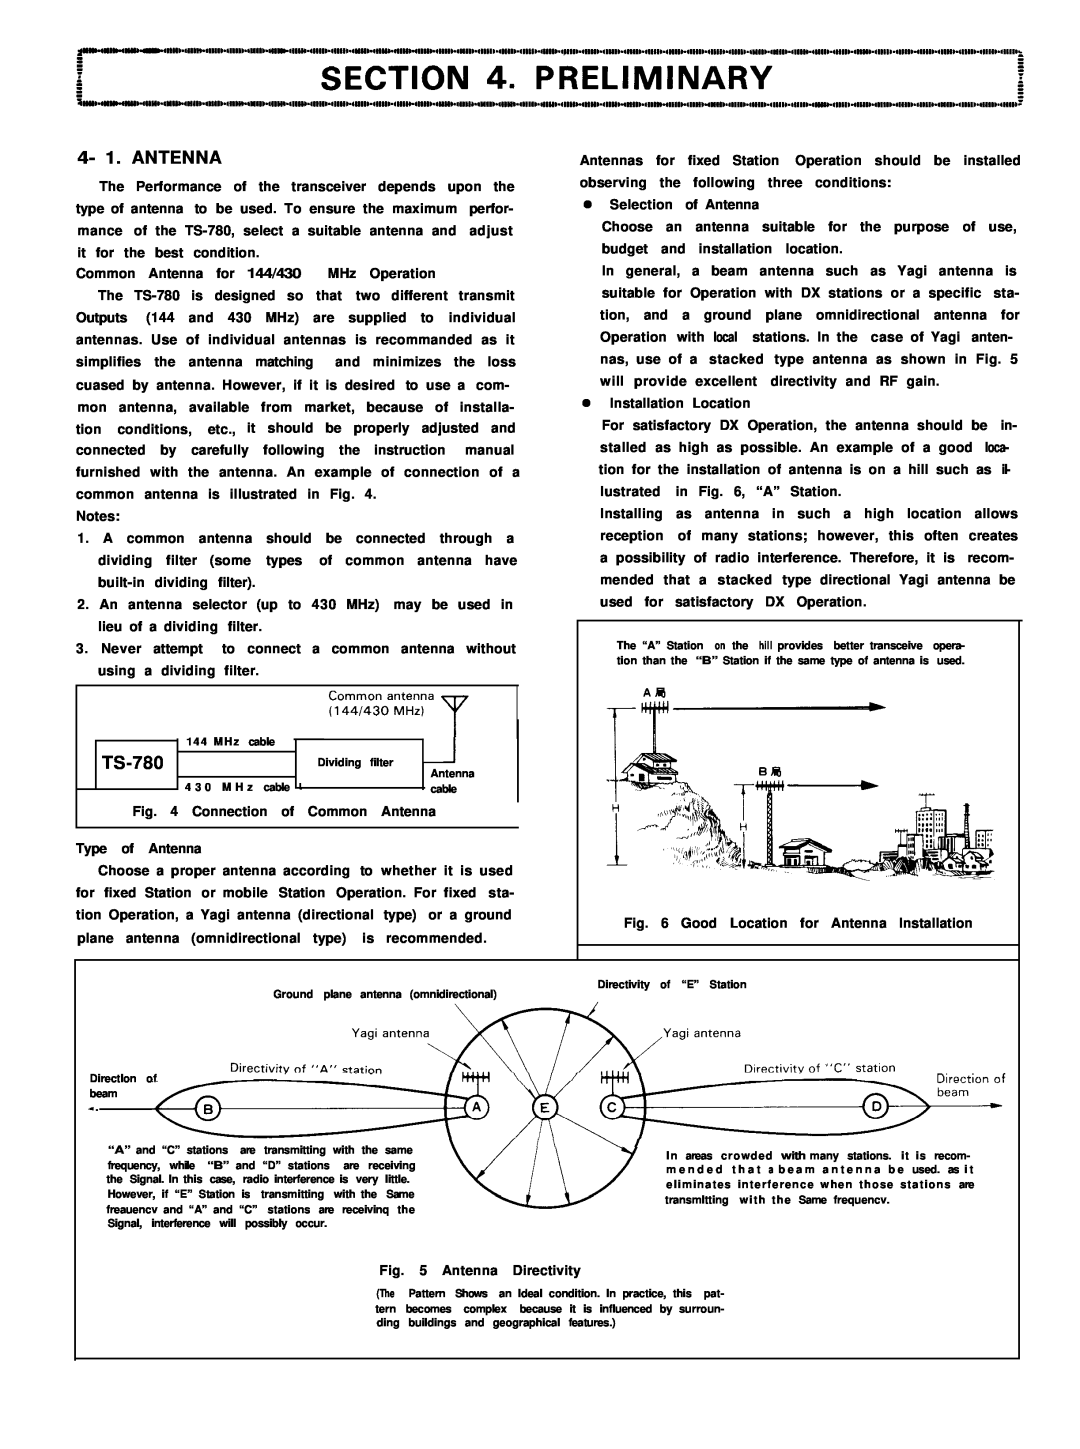 Kenwood TS-780 manual 4- 1. ANTENNA 